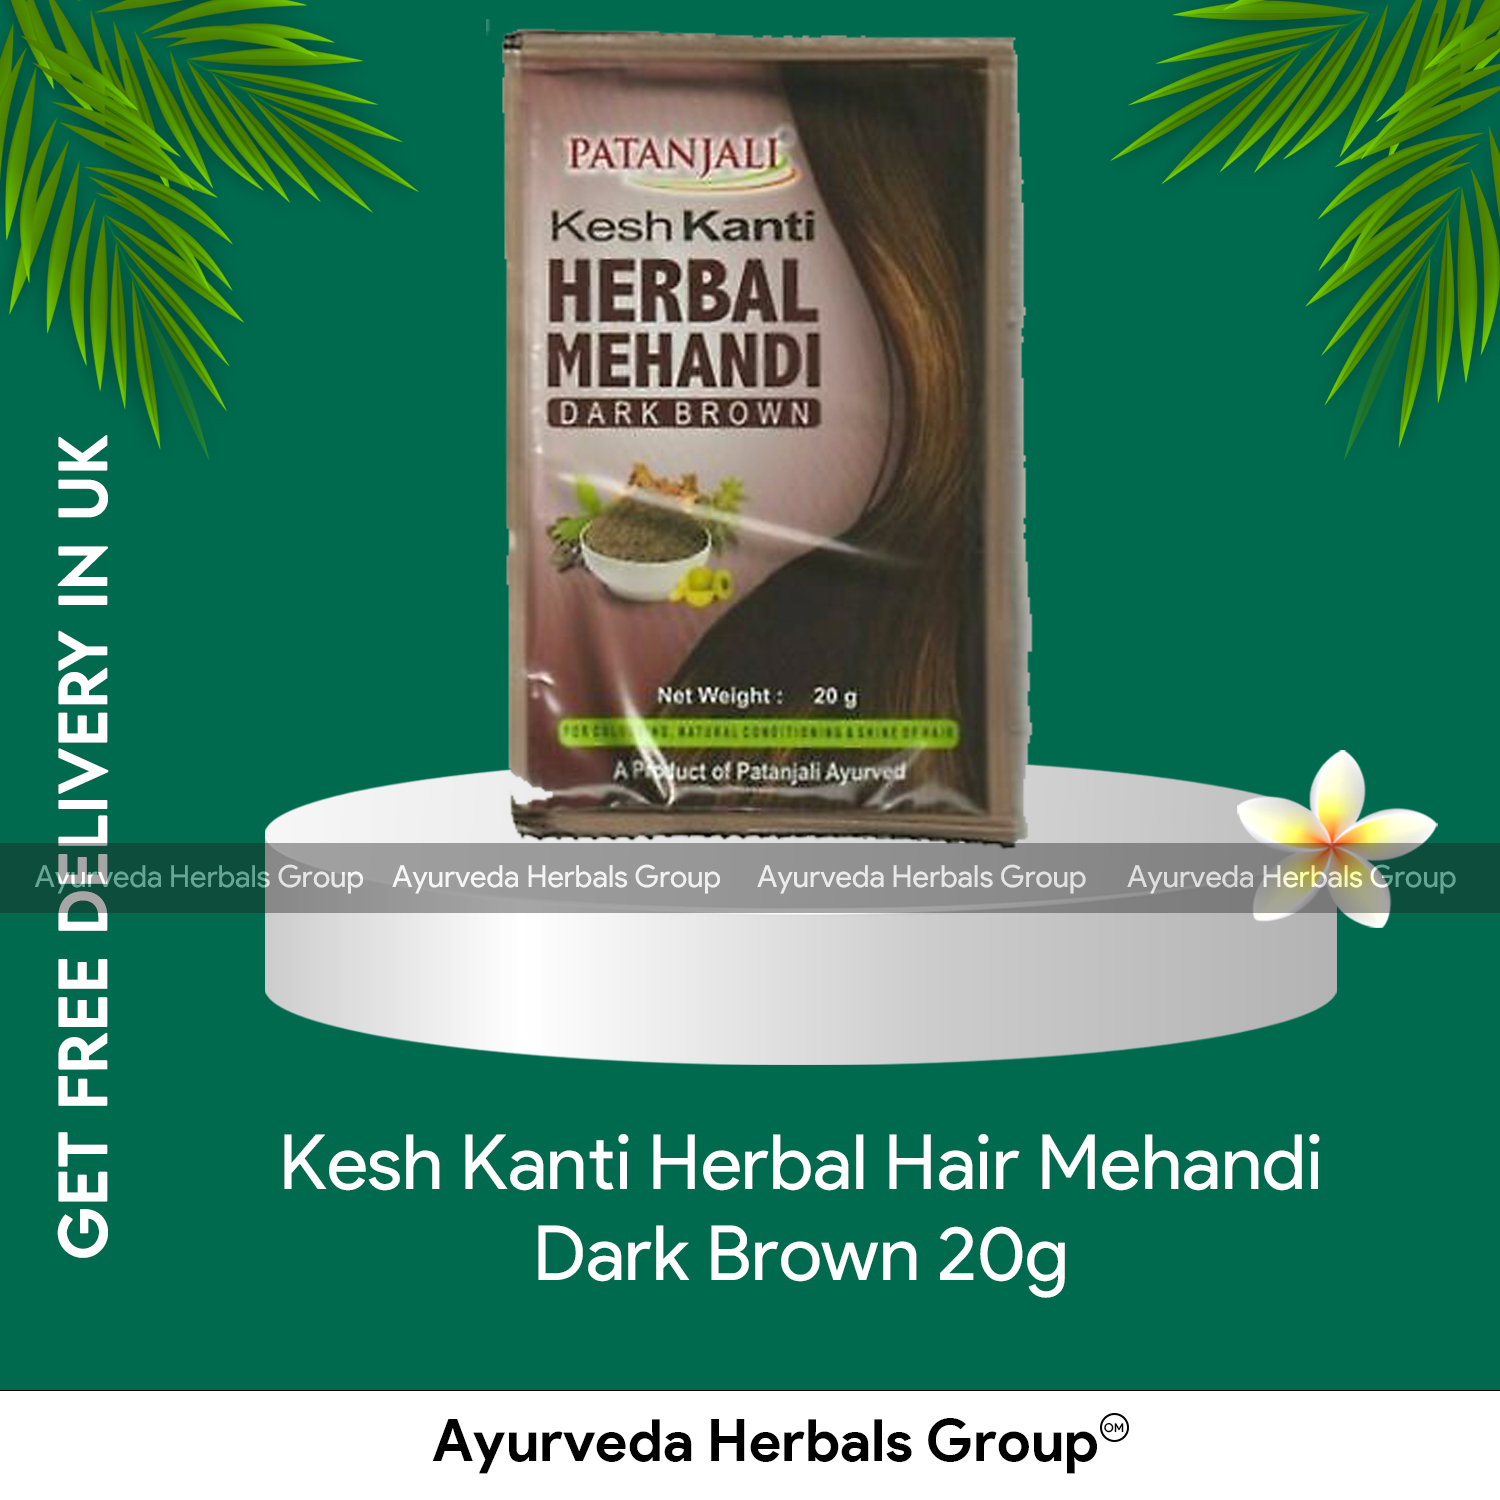 Patanjali Kesh Kanti Herbal Hair Mehandi Dark Brown 20g - Ecobay Herbals